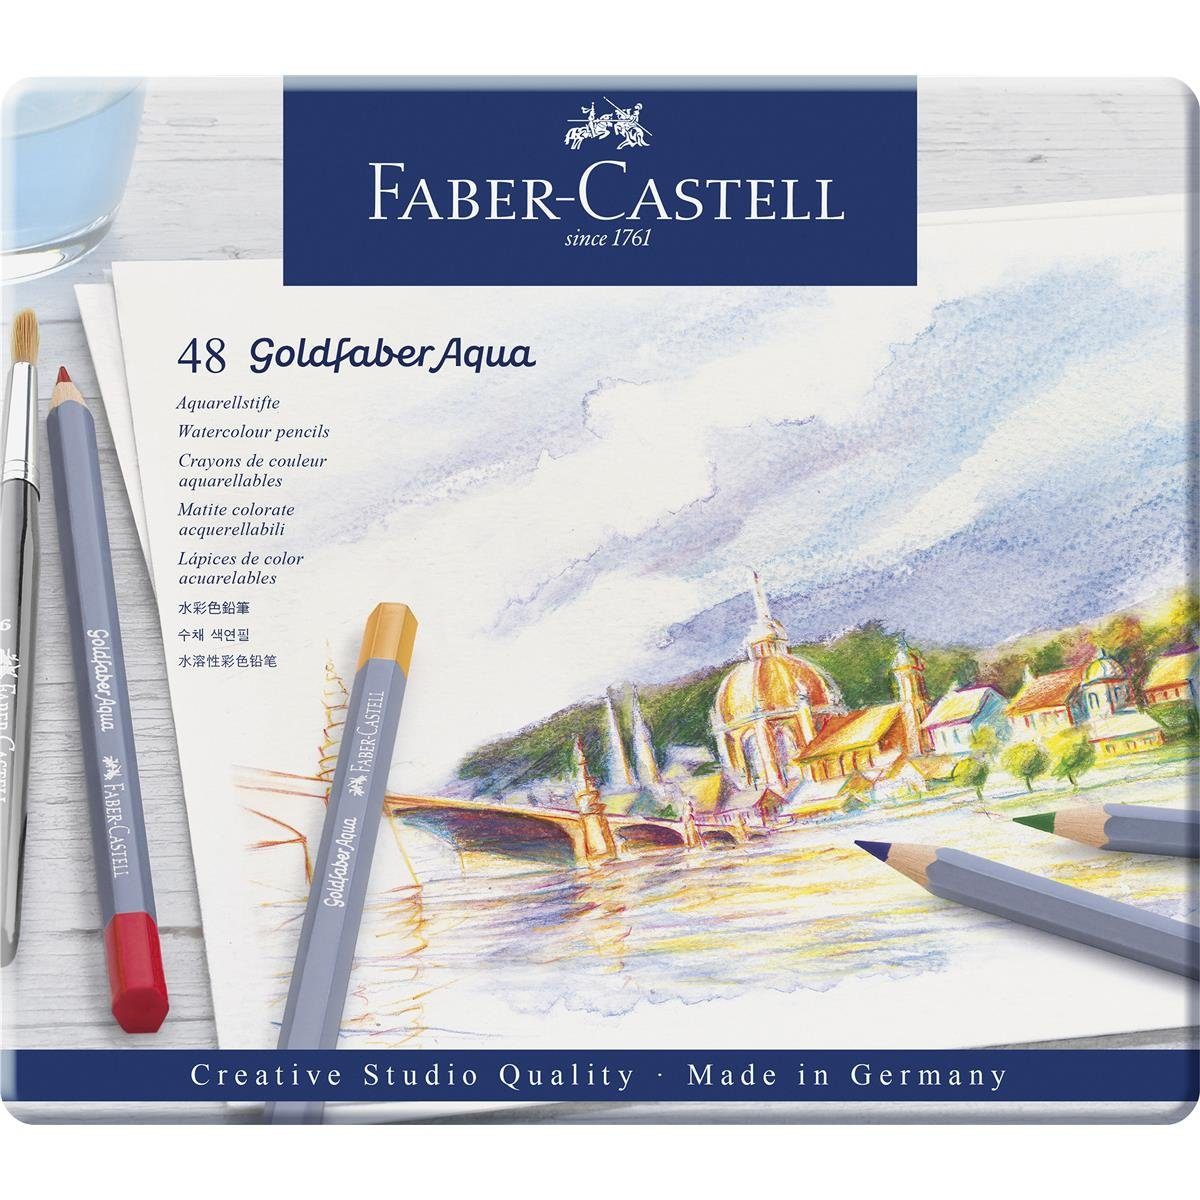 Faber-Castell Aquarellstifte Faber-Castell Goldfaber 48-Metalletui - Aqua Aquarellfarbstift